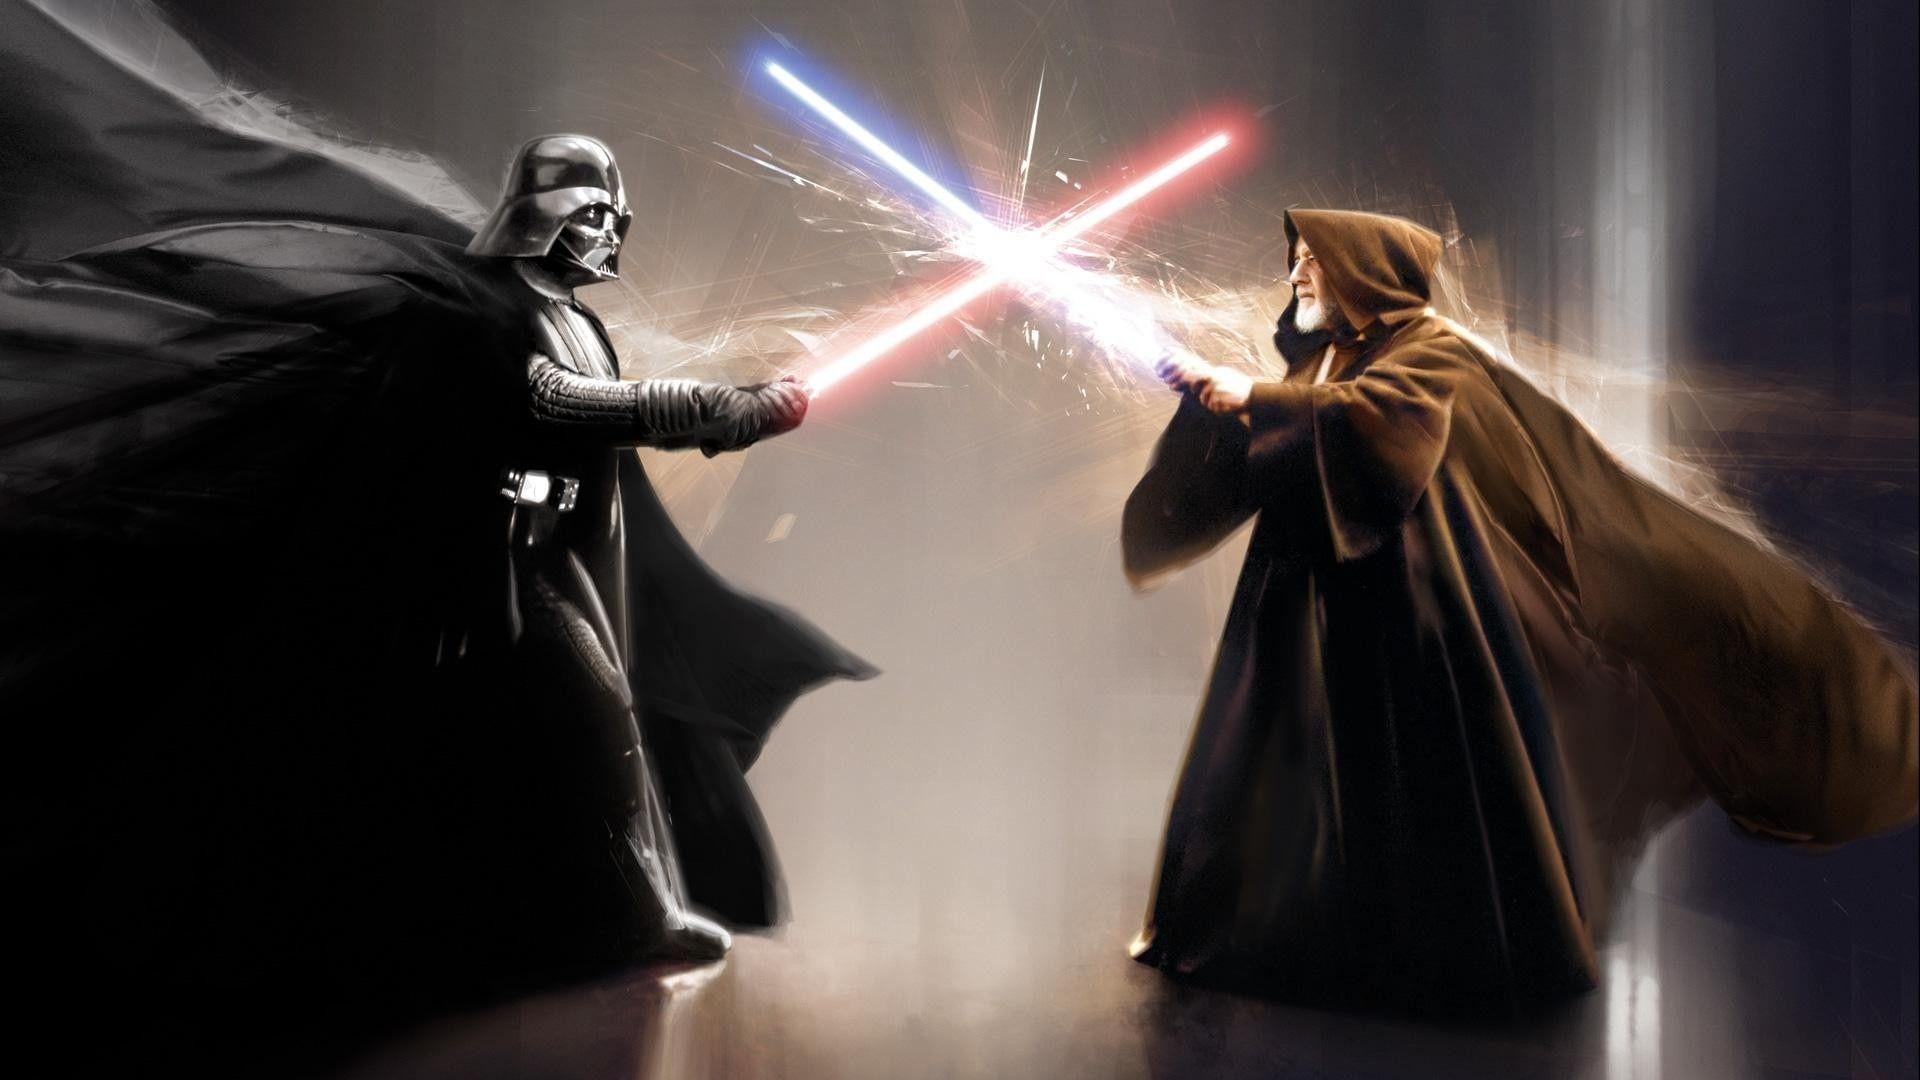 Darth Vader Obi Wan Kenobi Movies Star Wars Sci Fi Weapons